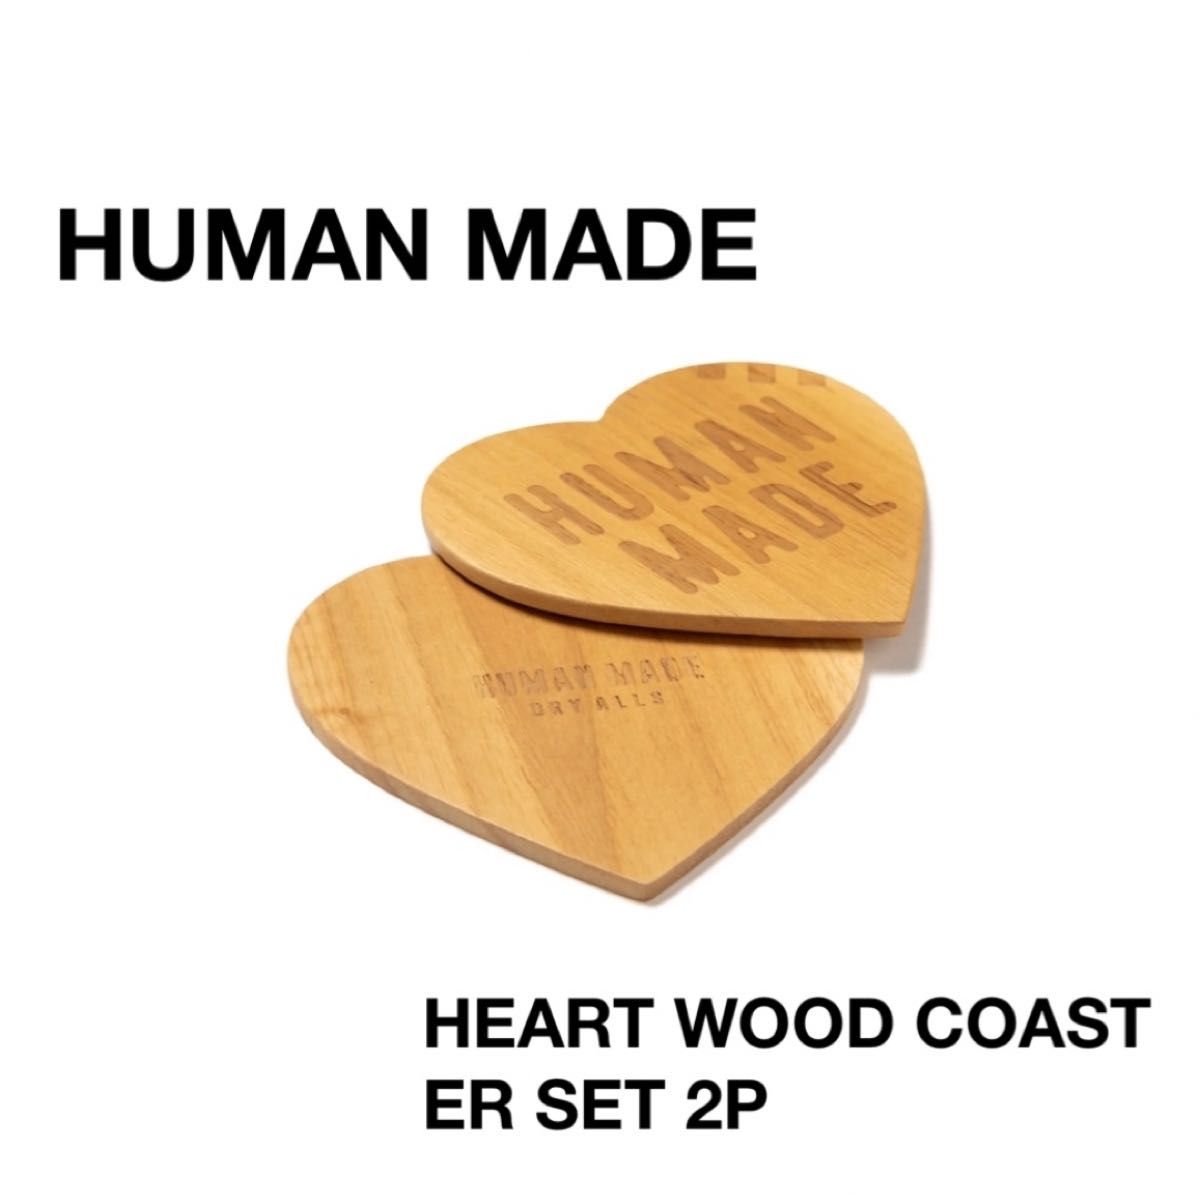 HUMAN MADE HEART WOOD COASTER SET 2P